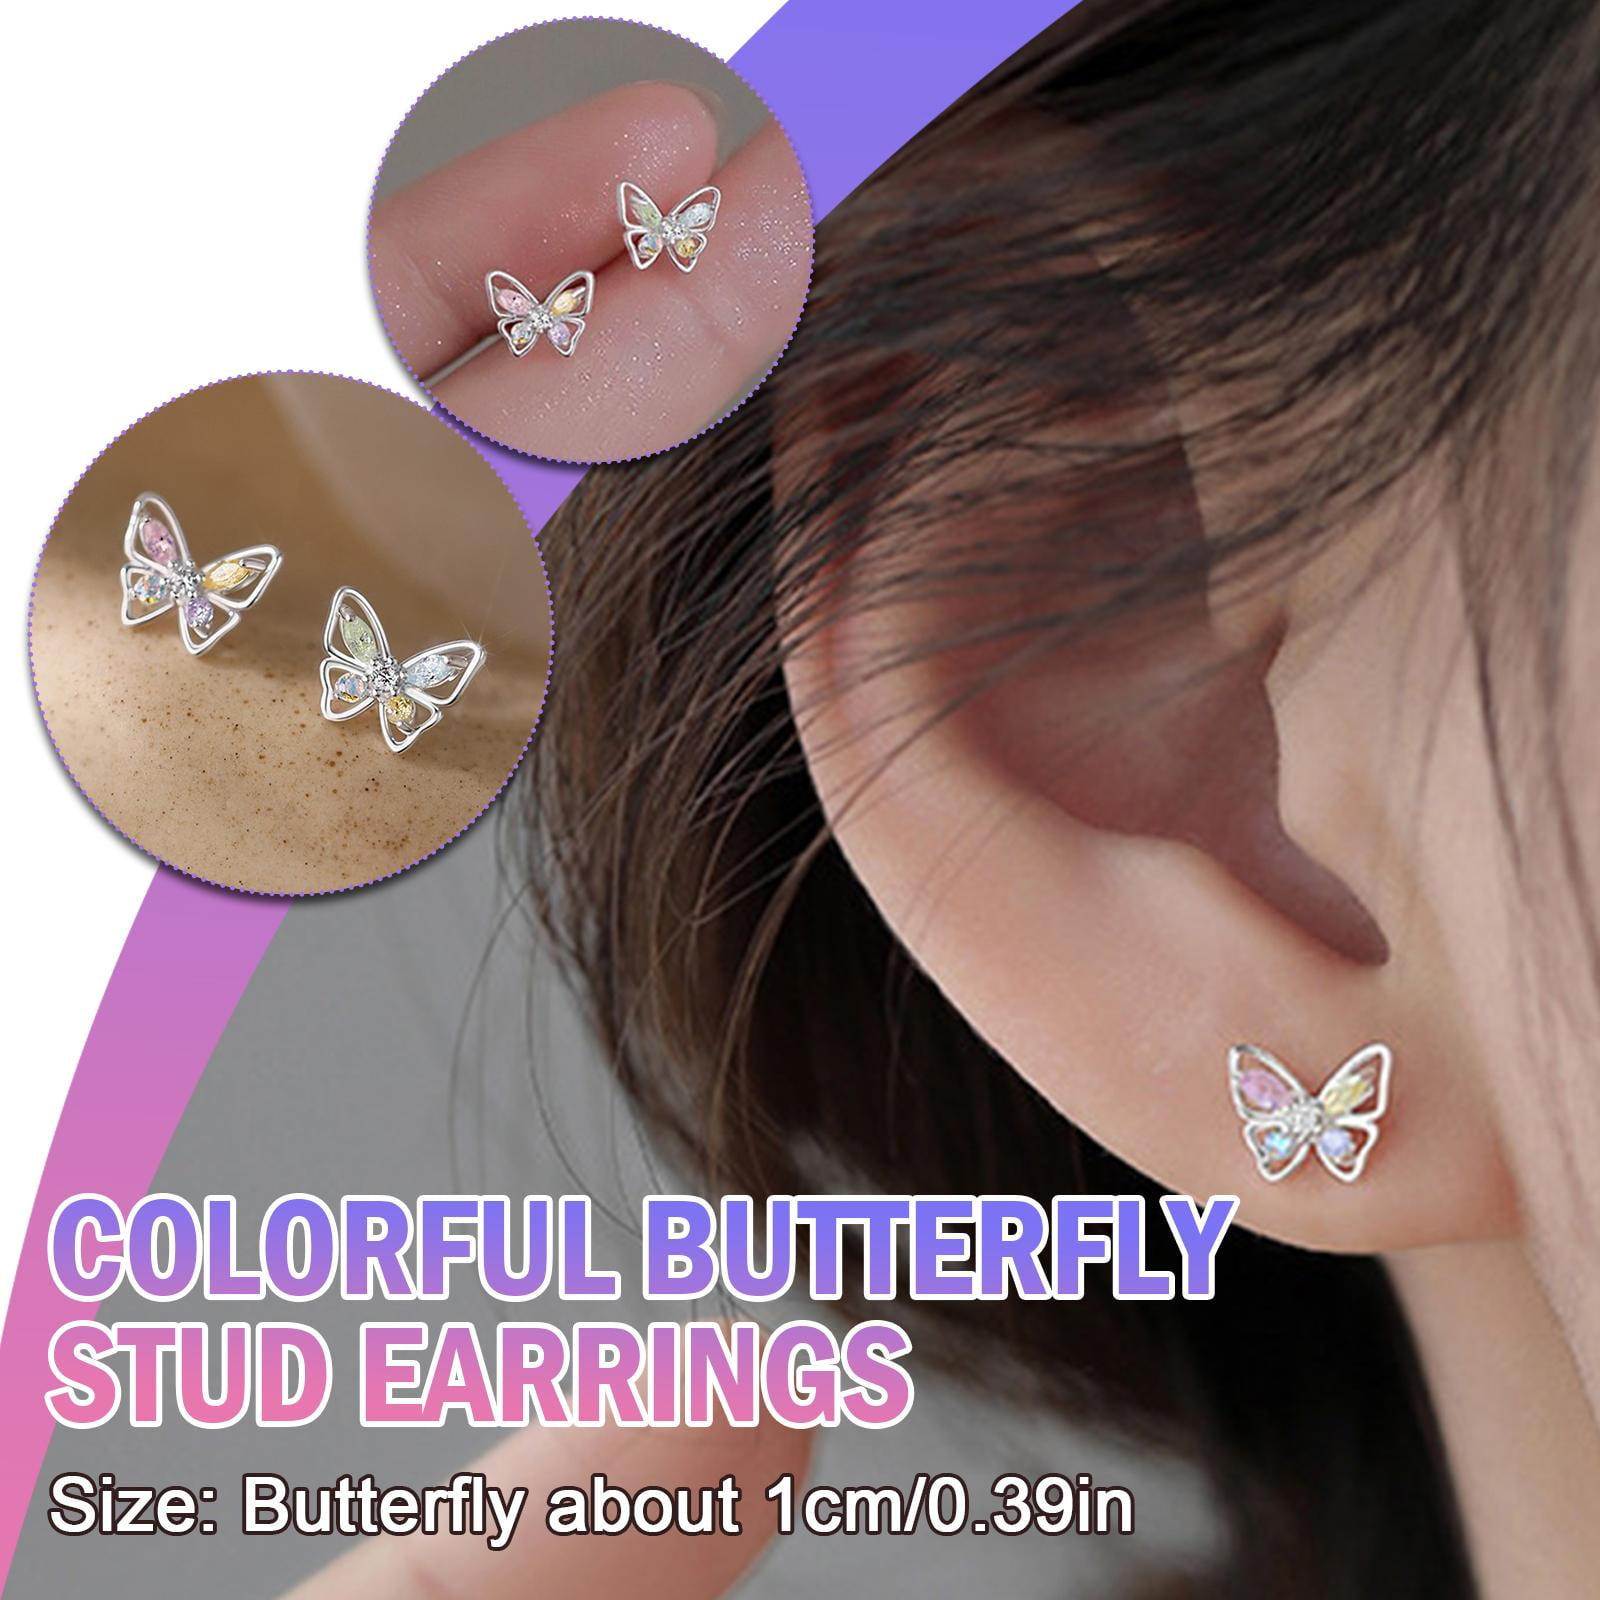 Butterfly Earrings Stud, Floral Earrings, First Earrings for Little Girls, Ear Piercing Gift, Small Studs, Birthday Gift for 8 Year Old Girl